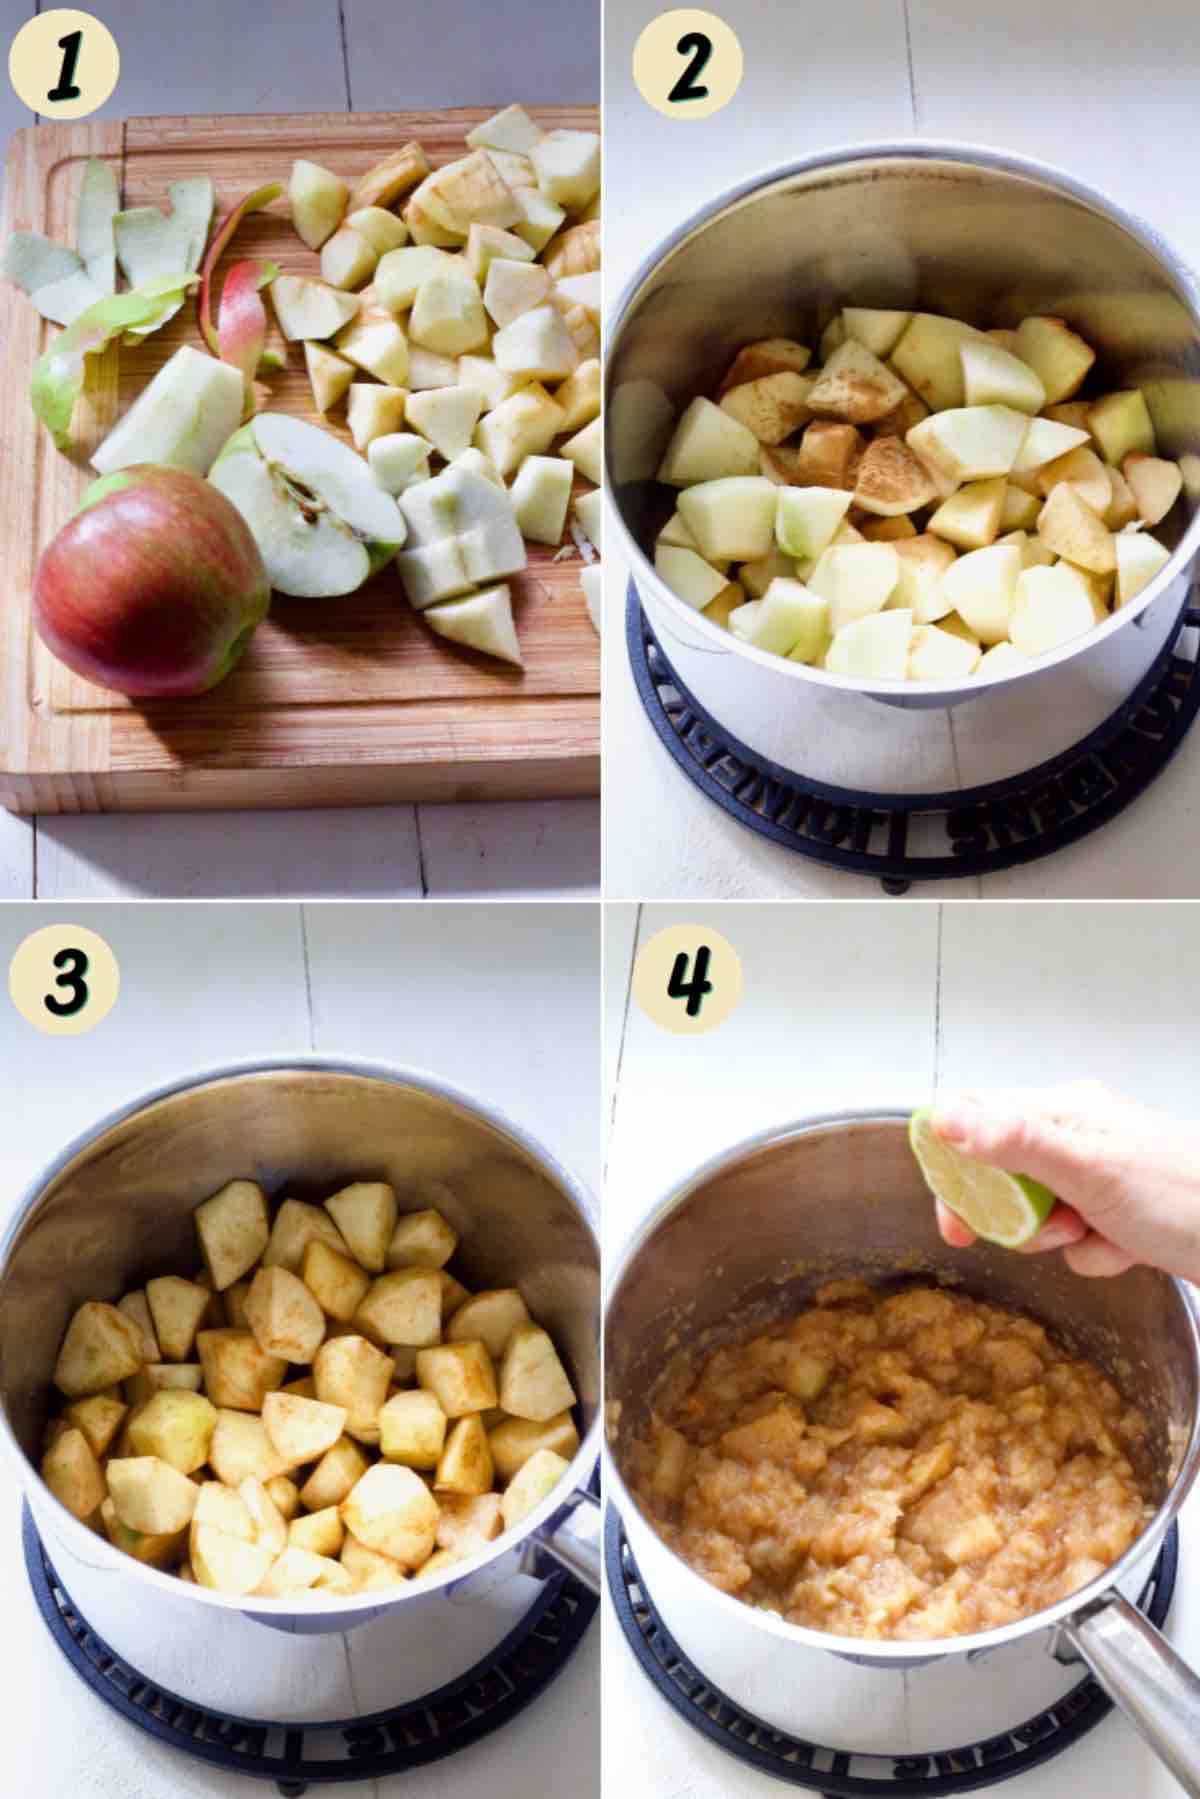 Process of making apple puree.